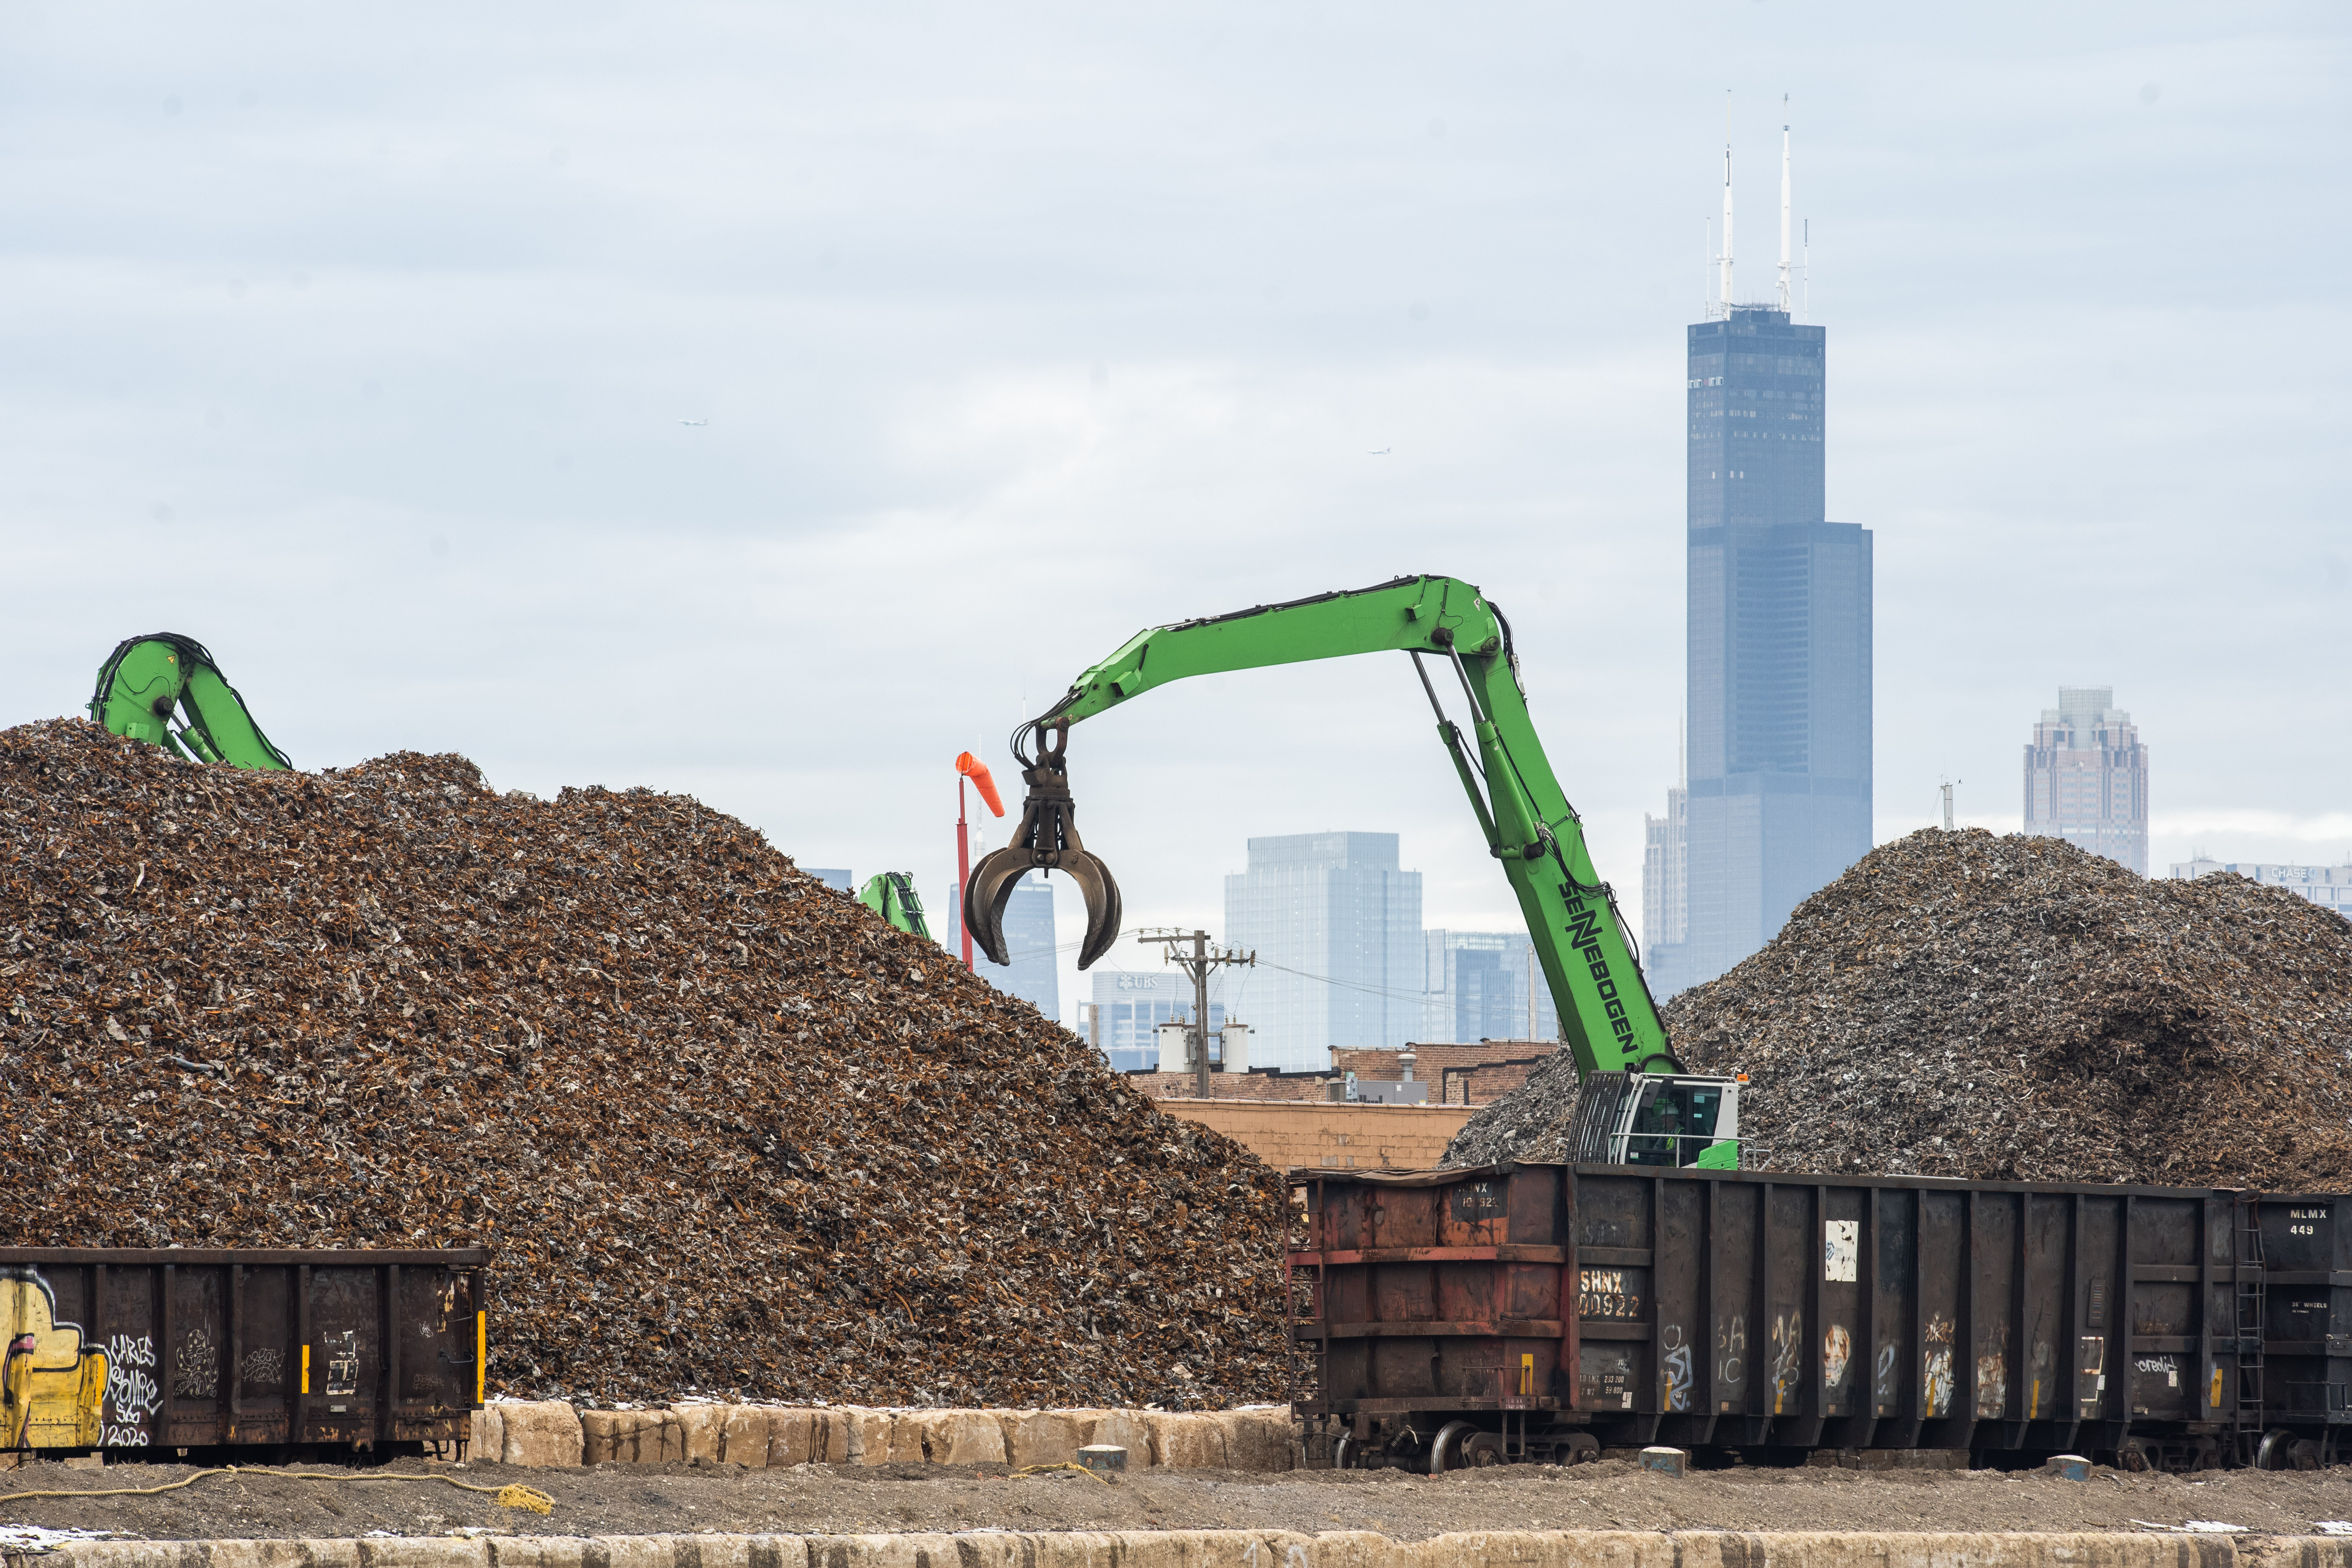 Pilsen metal shredder could become next big environmental battle in Chicago